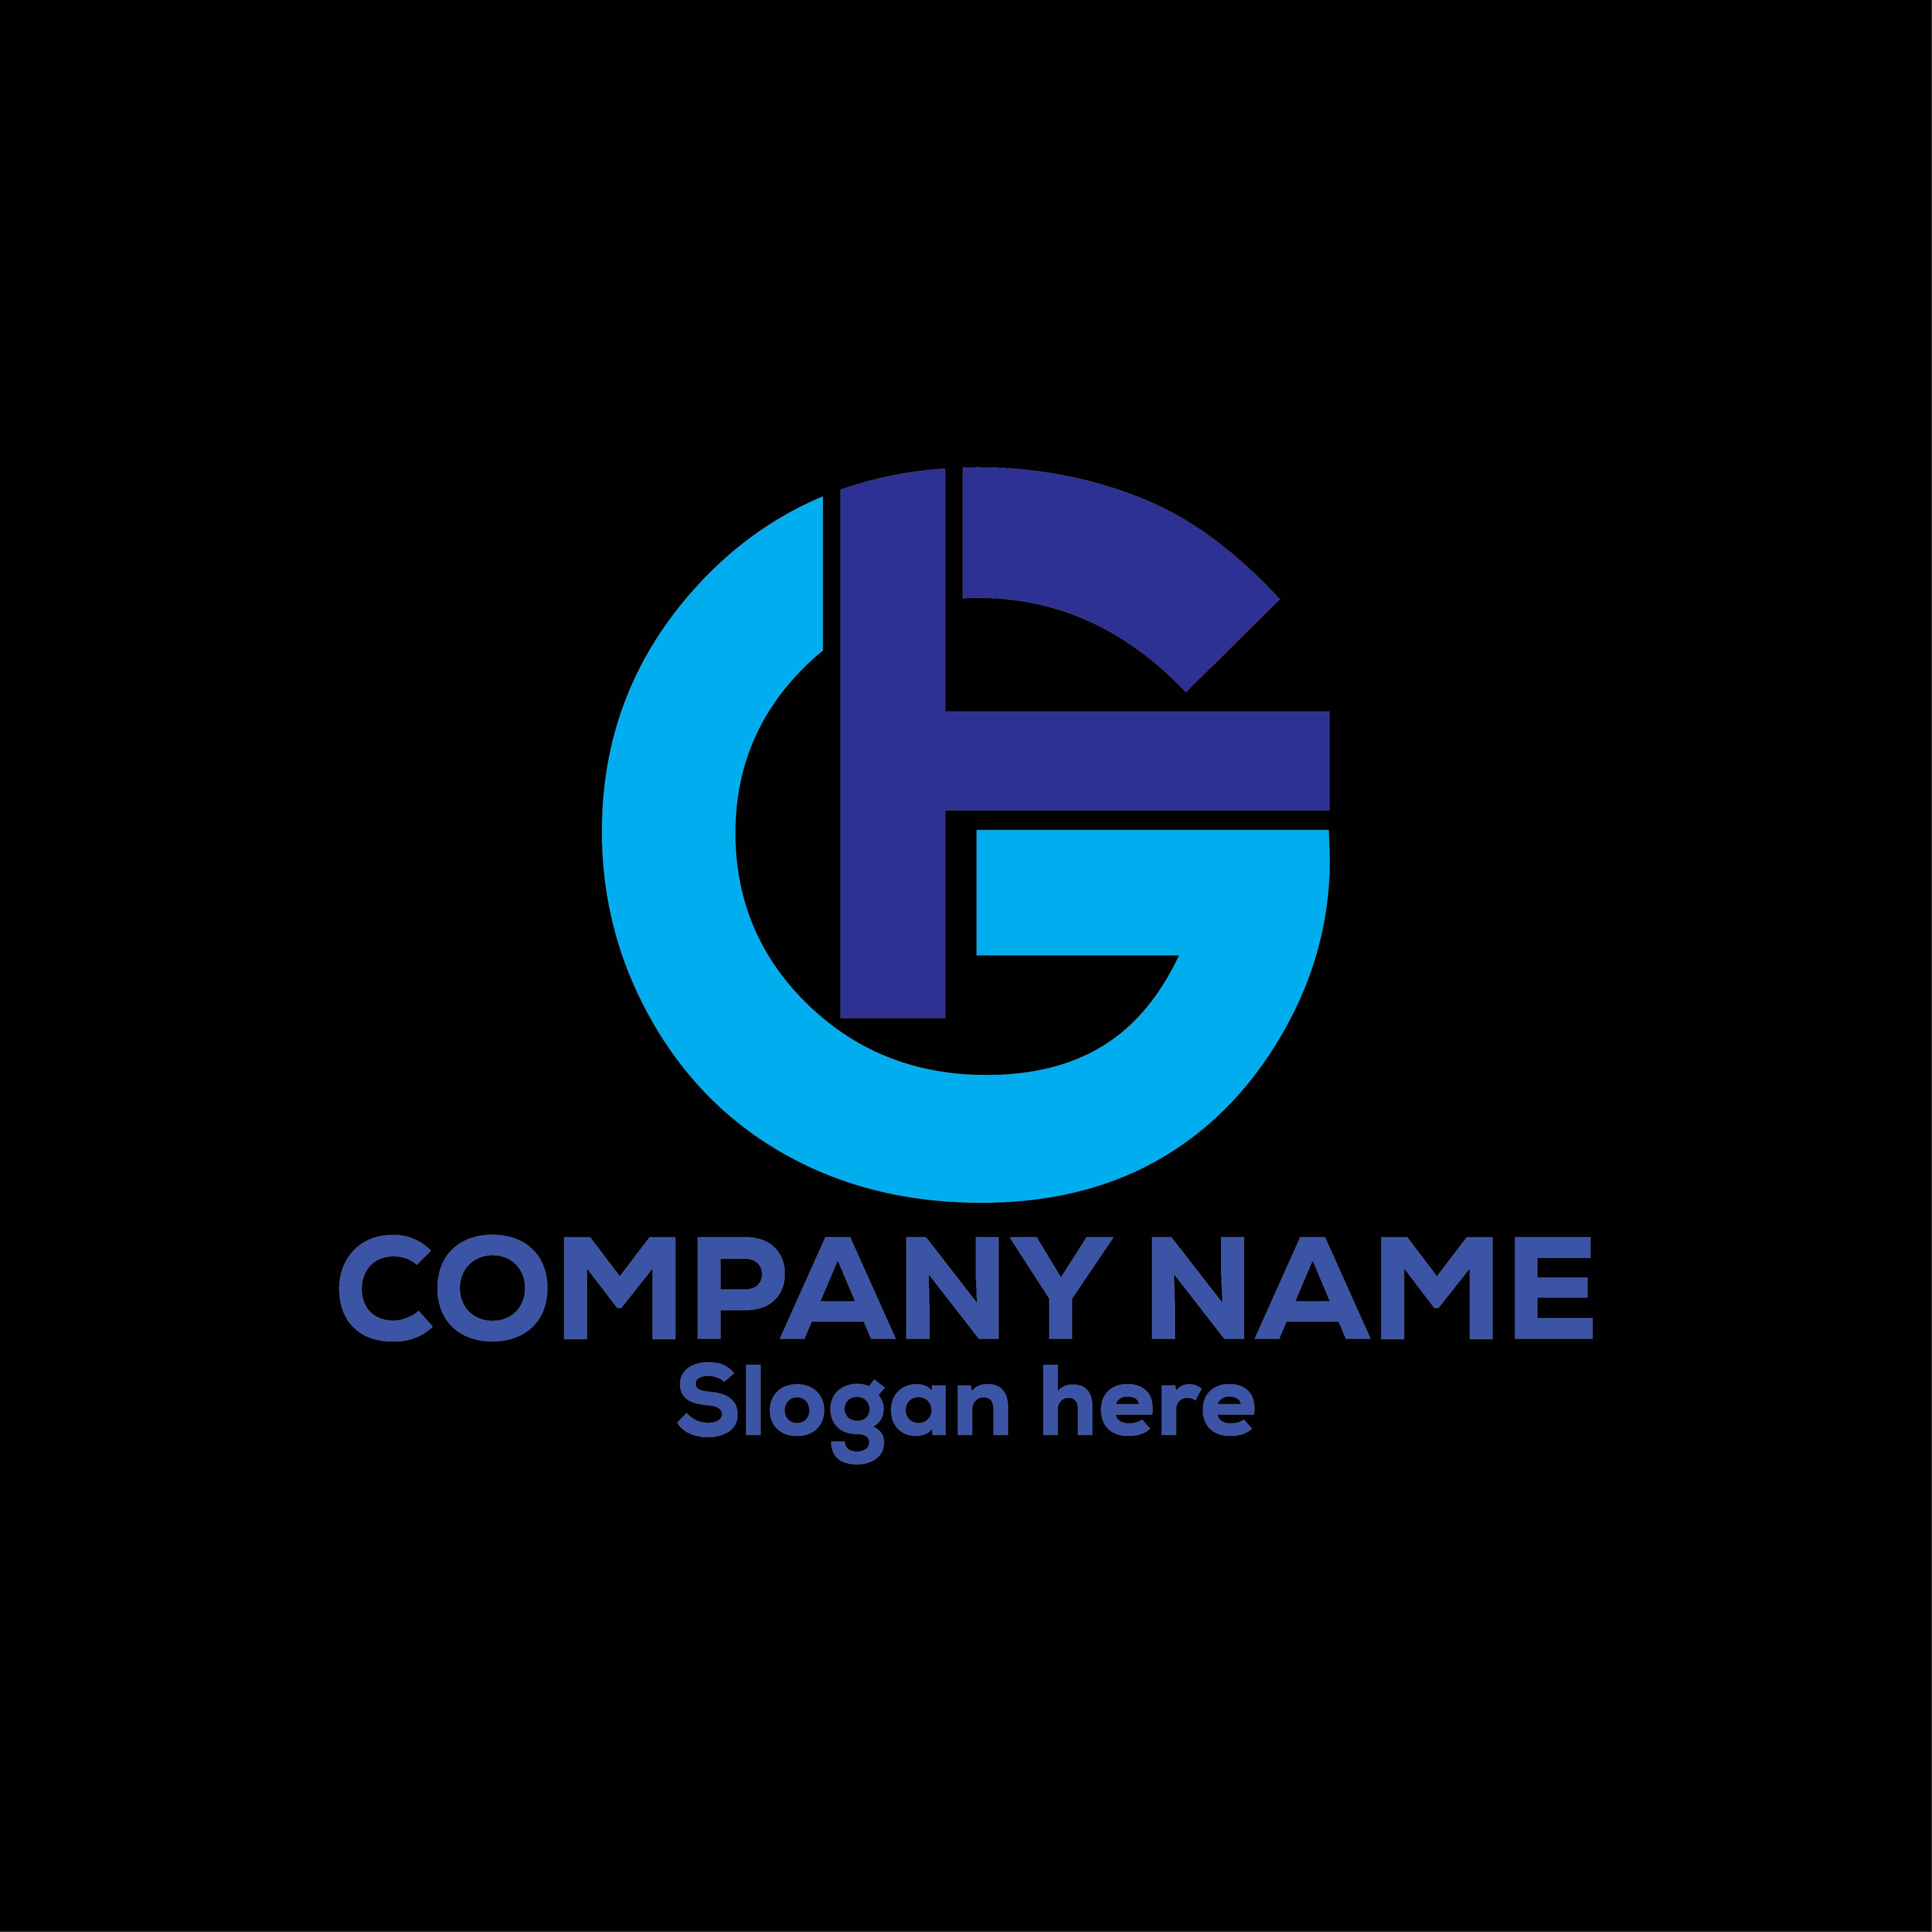 Gf logo letter design on luxury background. fg logo monogram • wall  stickers flat, identity, fashion | myloview.com